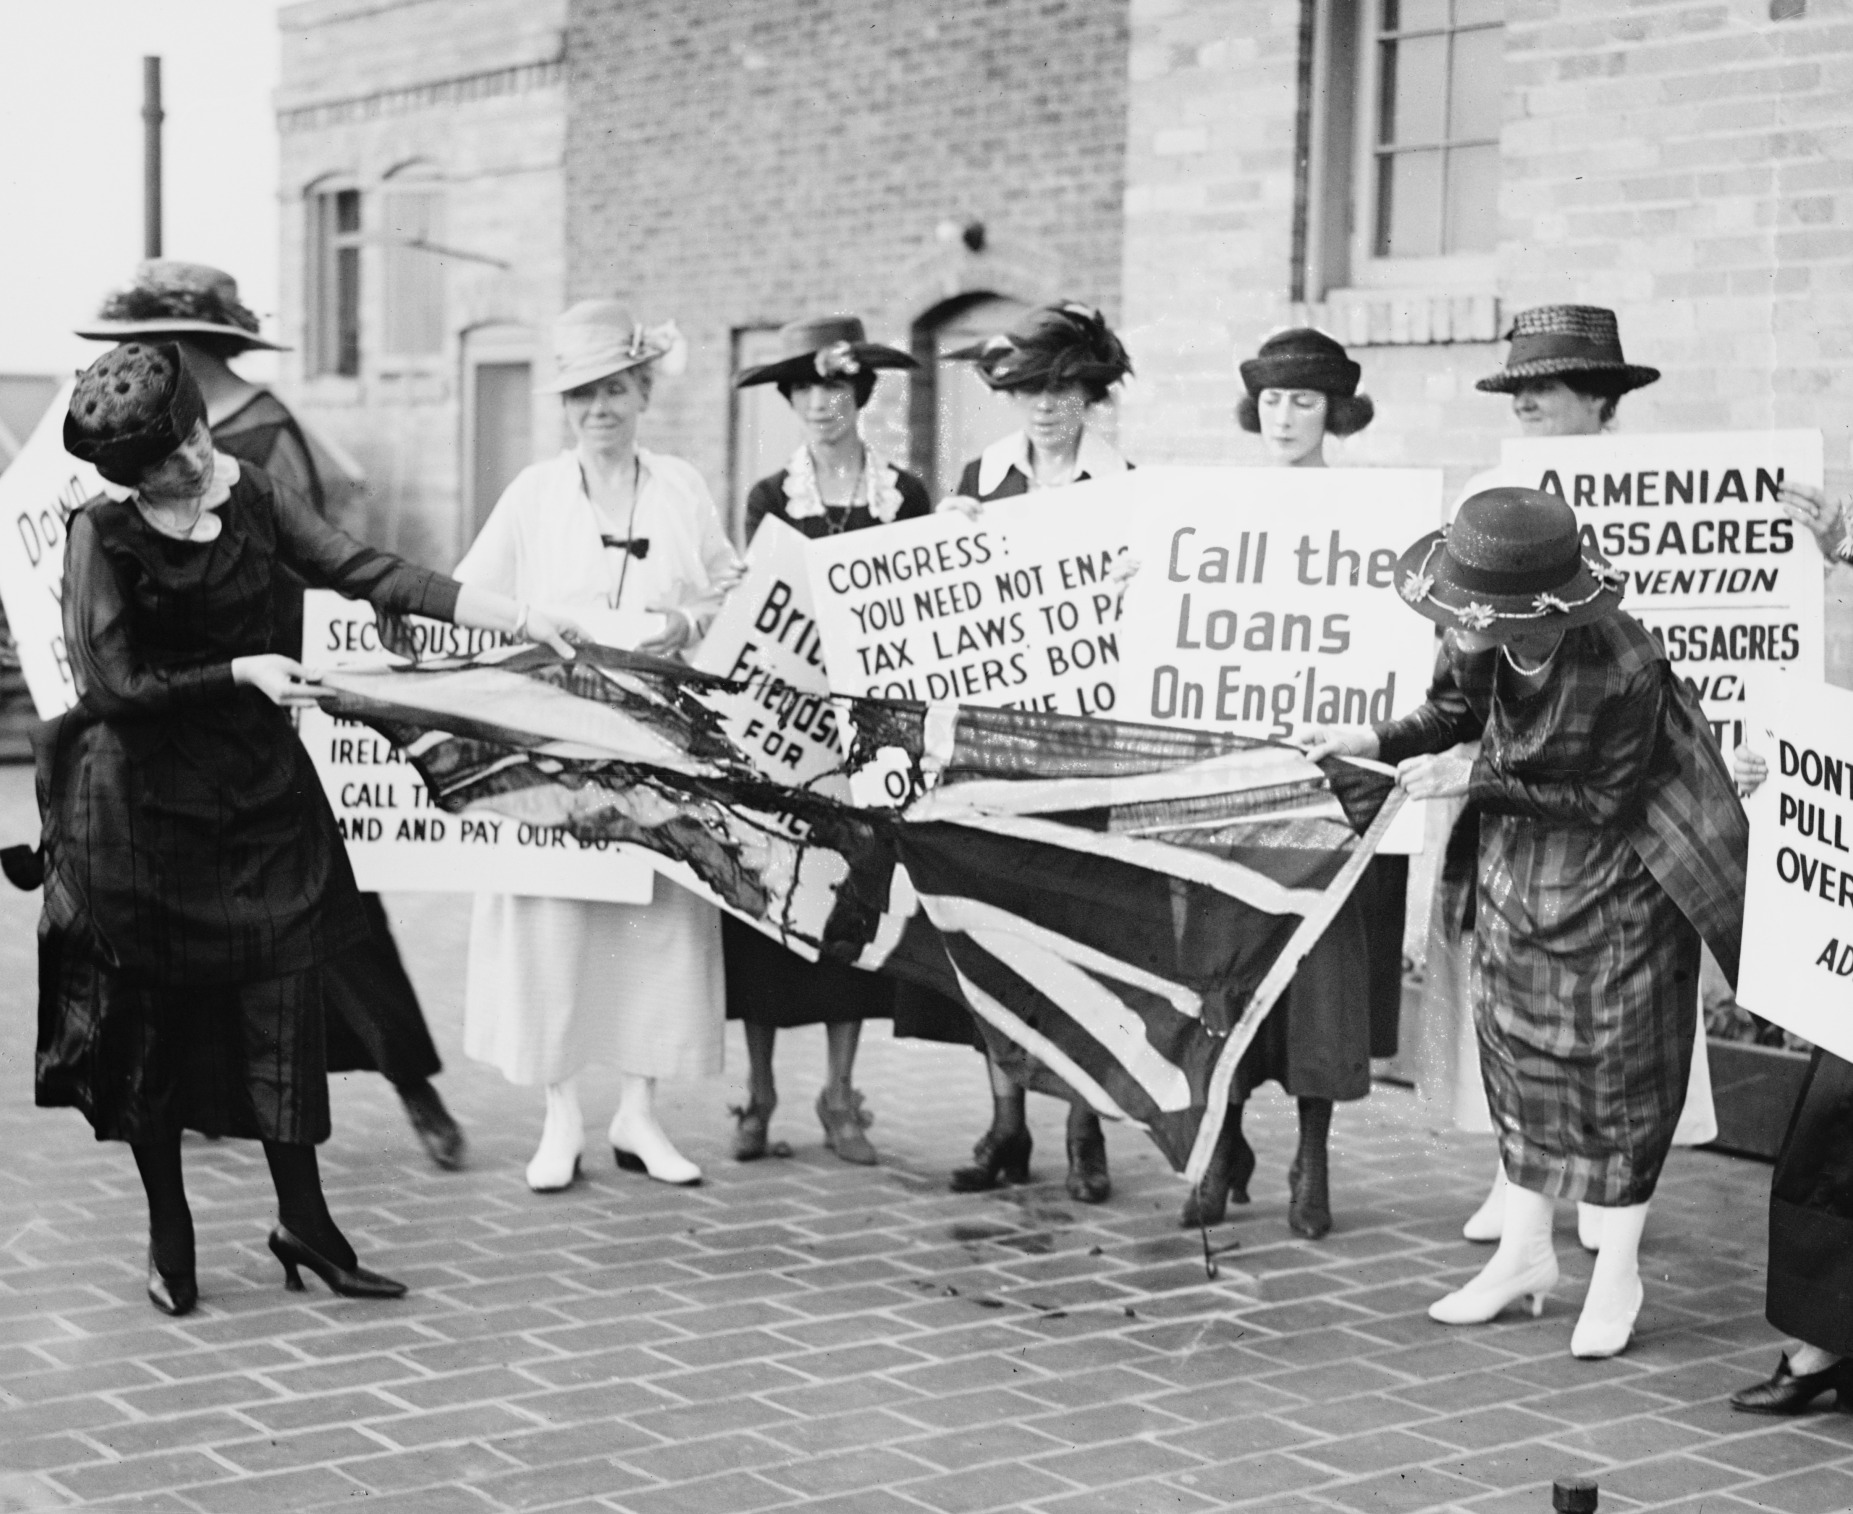 A_group_of_women_on_the_sidewalk,_June_3,_1920